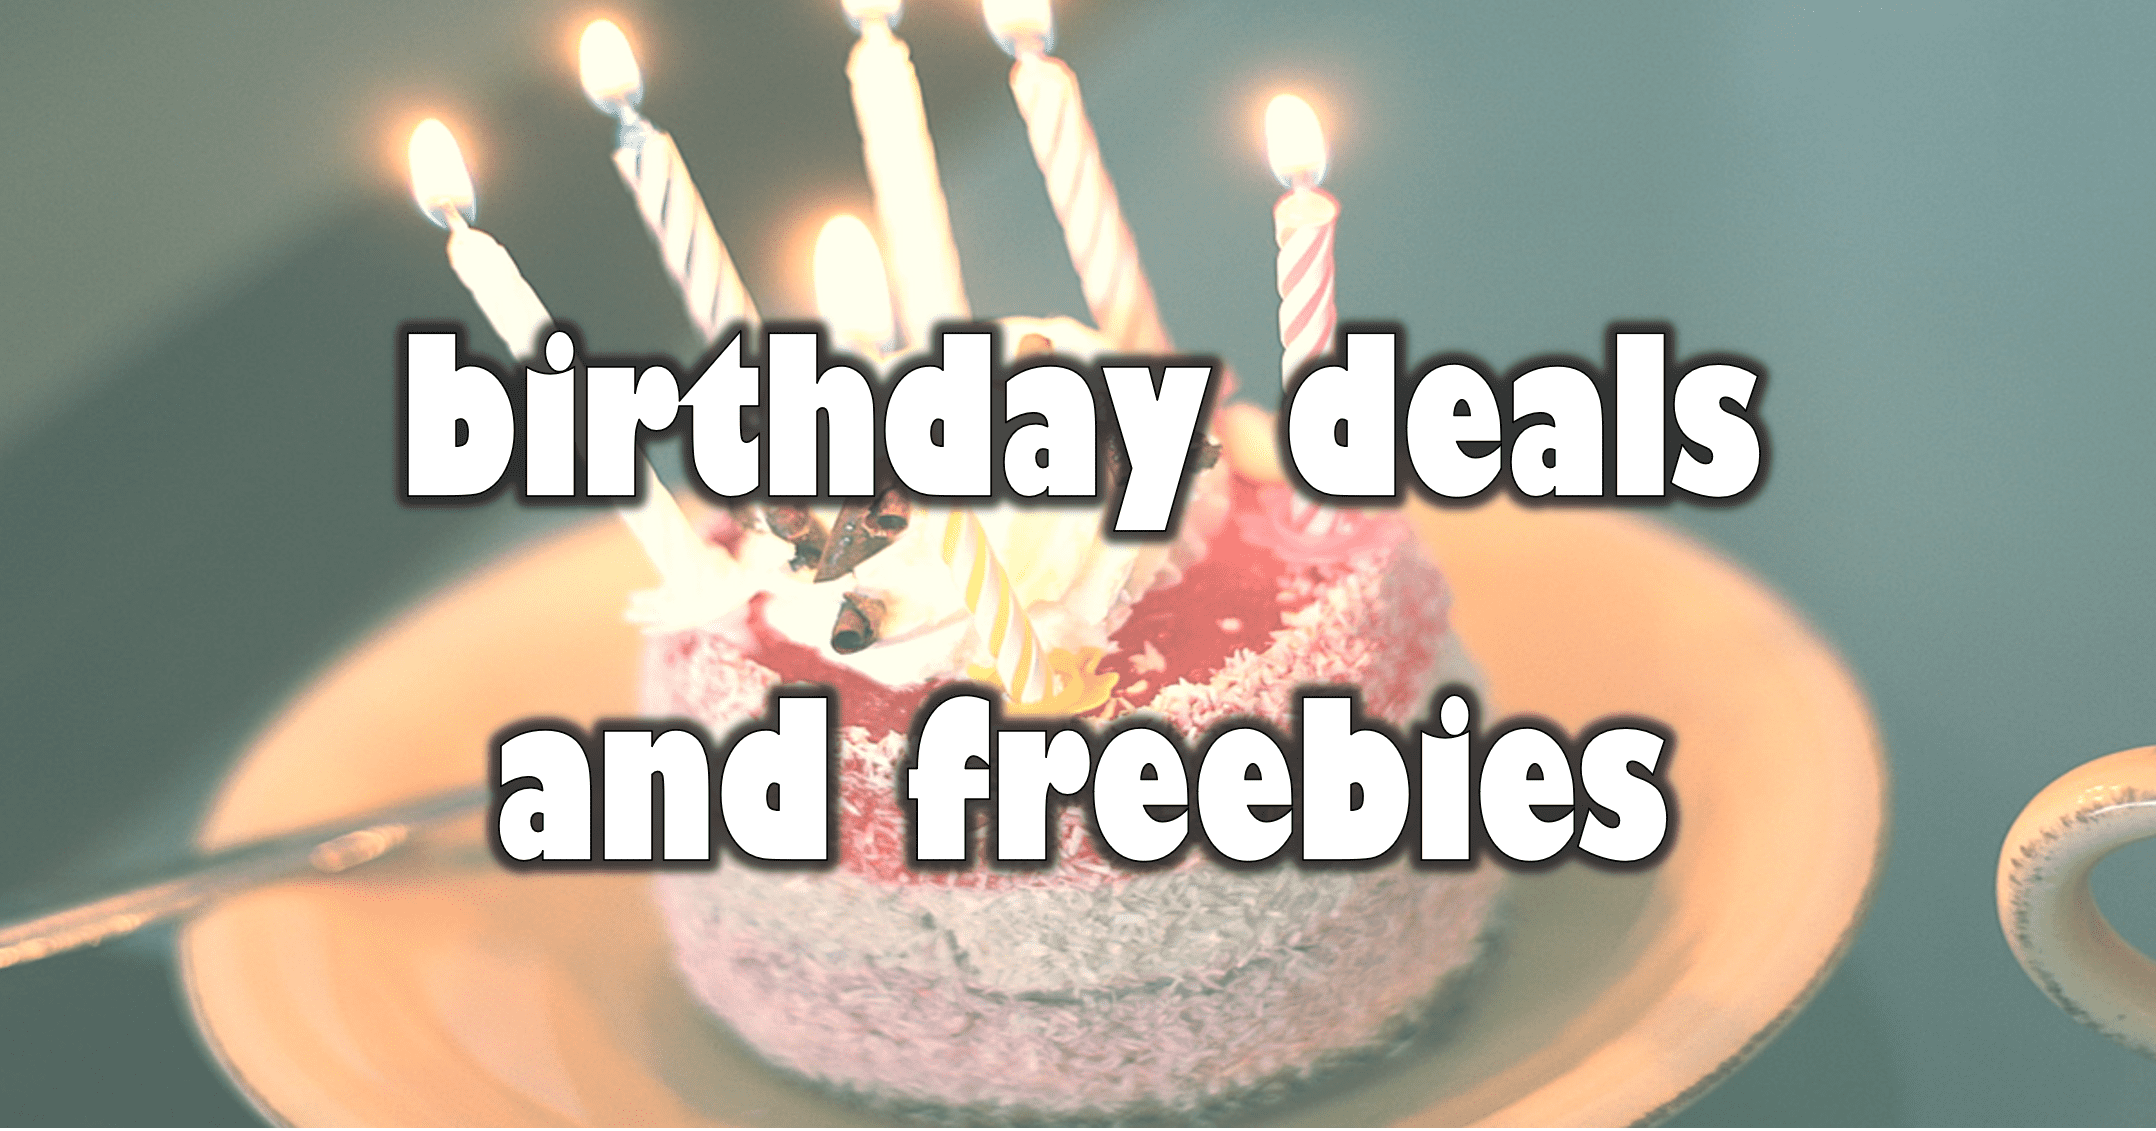 Birthday Freebies: Free Food or Beverage On Your Birthday